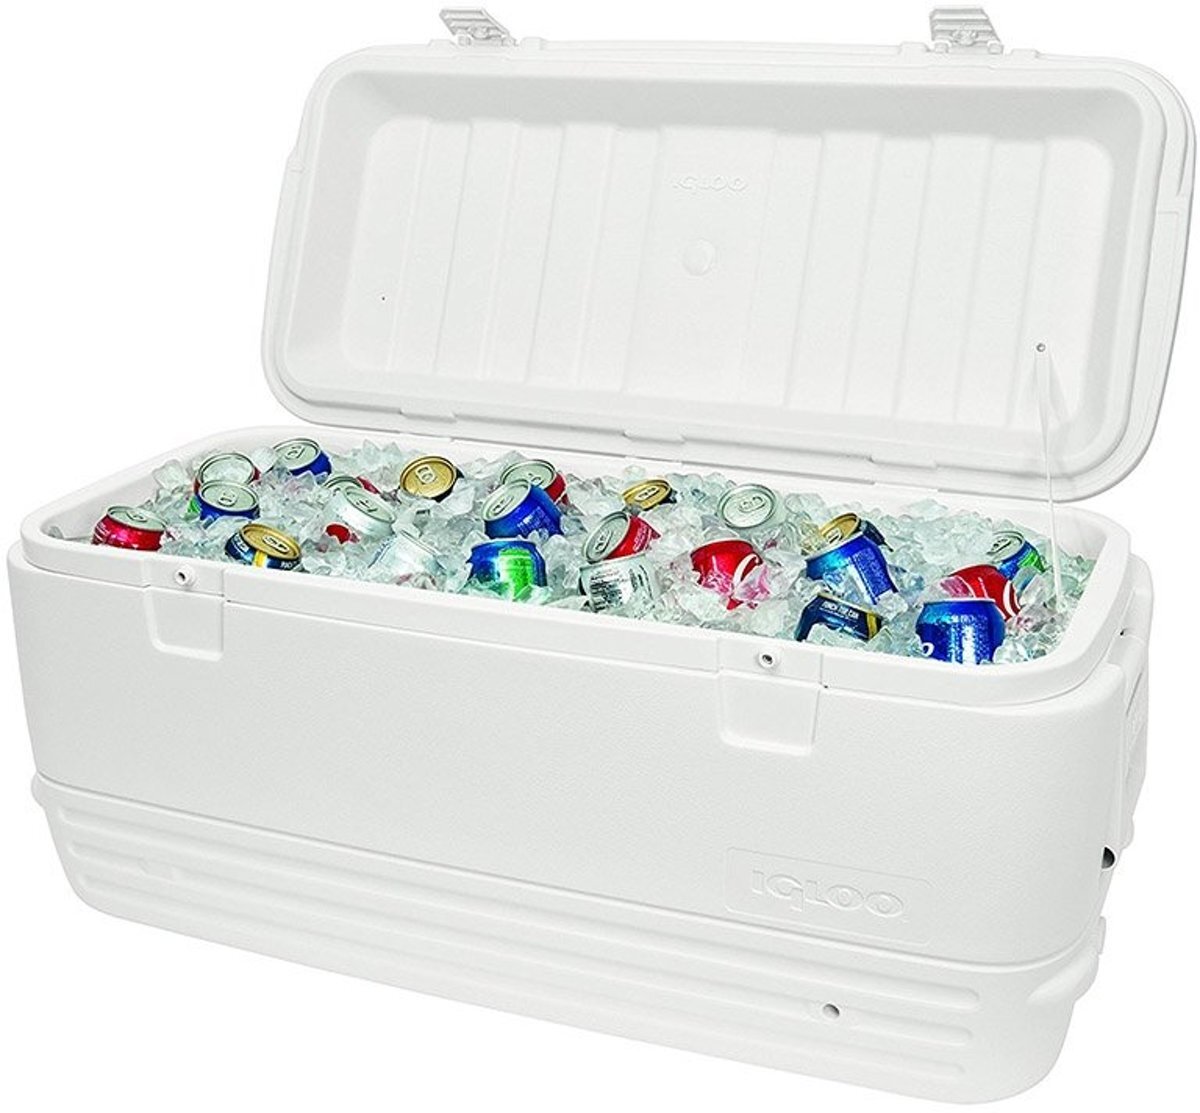 Igloo Quick & Grote Koelbox - Frigobox - 113 liter - Wit koelbox kopen? | Kieskeurig.nl | helpt je kiezen